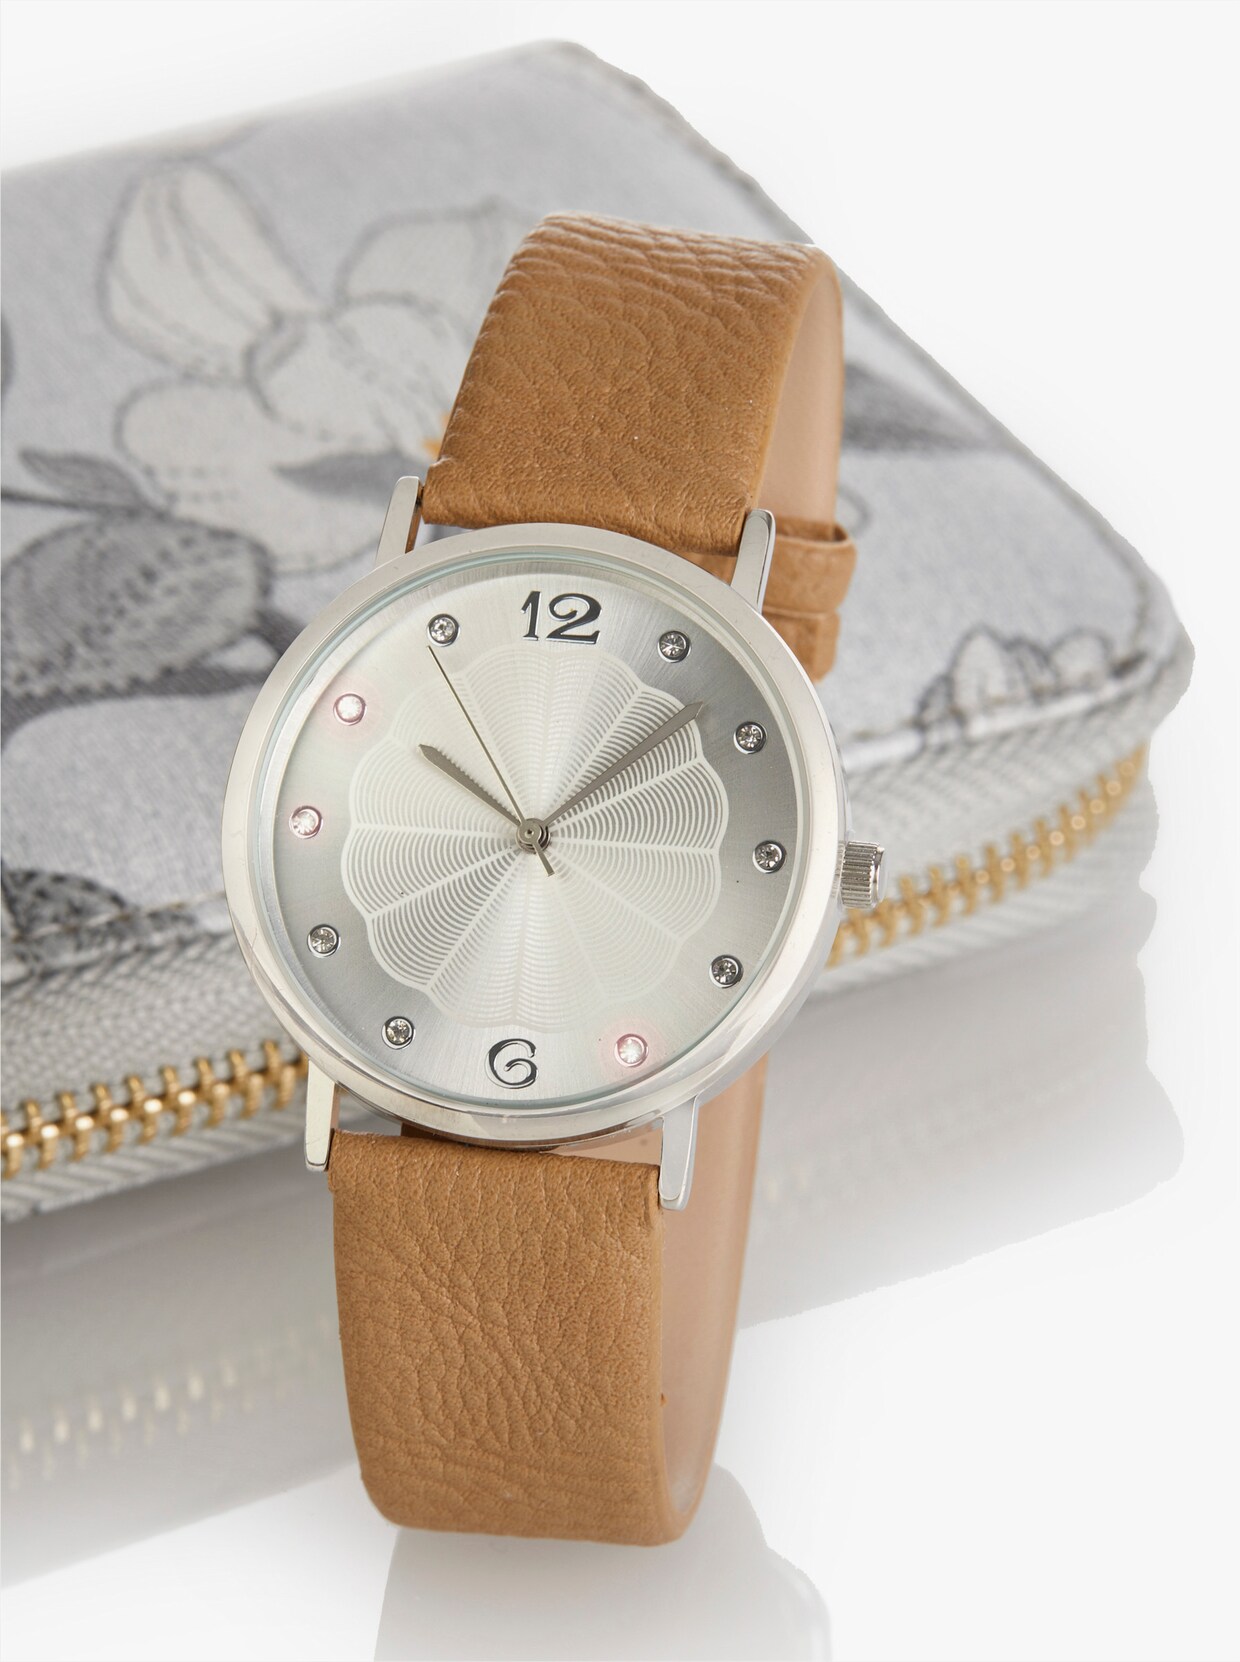 Plånbok + klocka - grå, blommig